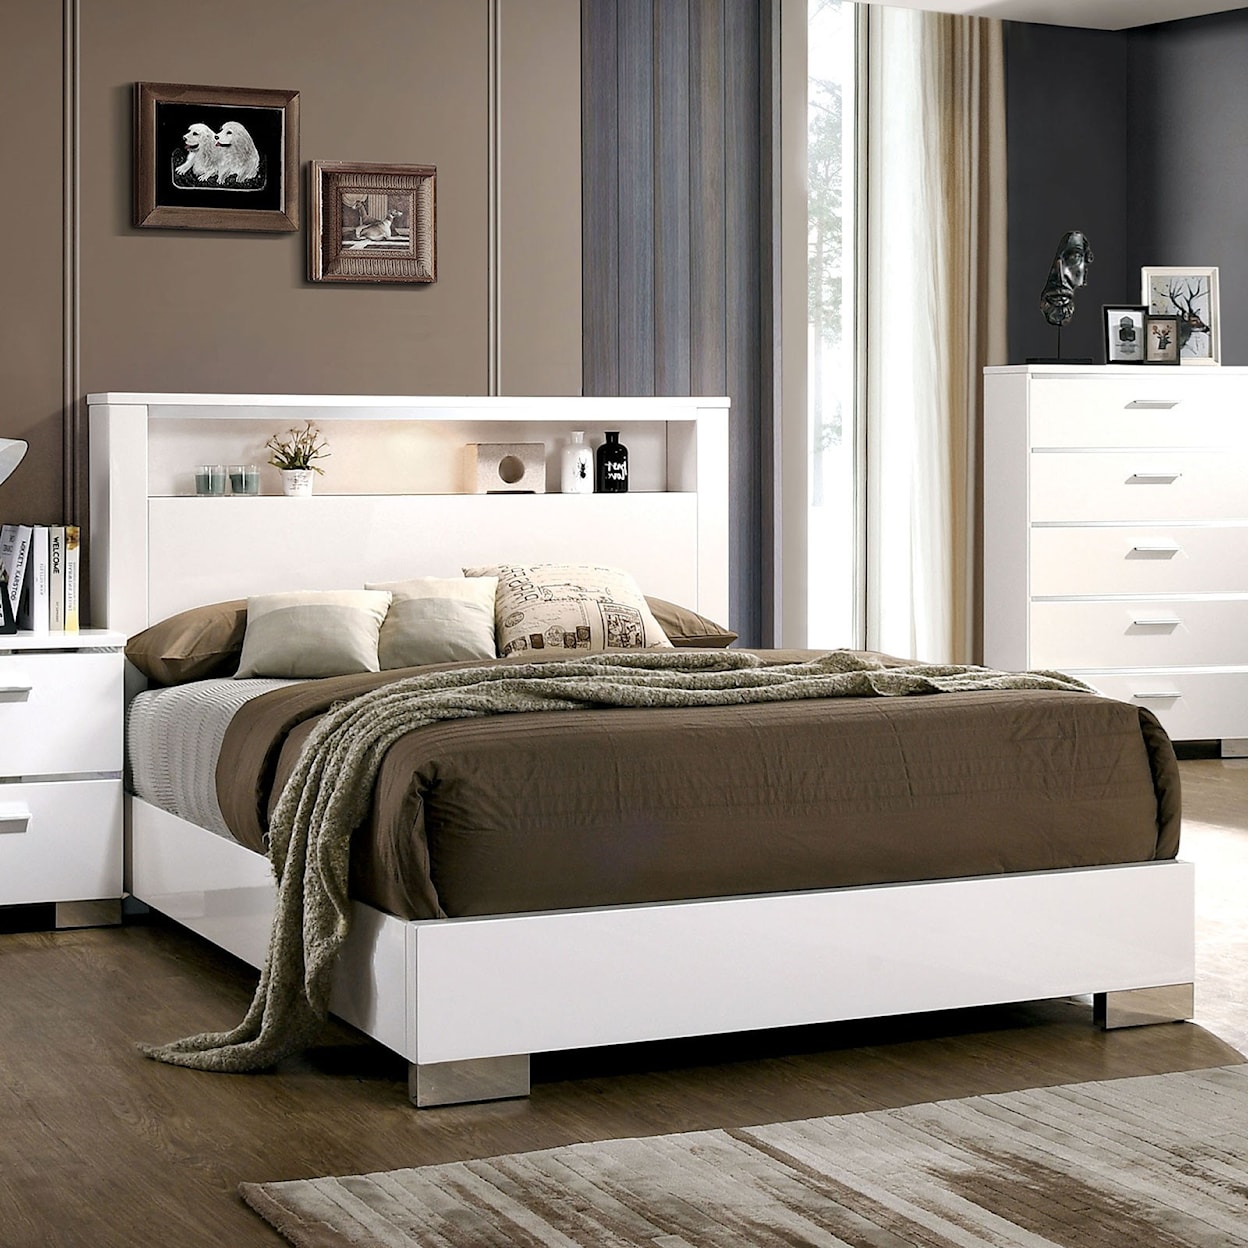 Furniture of America Malte Queen Panel Bed